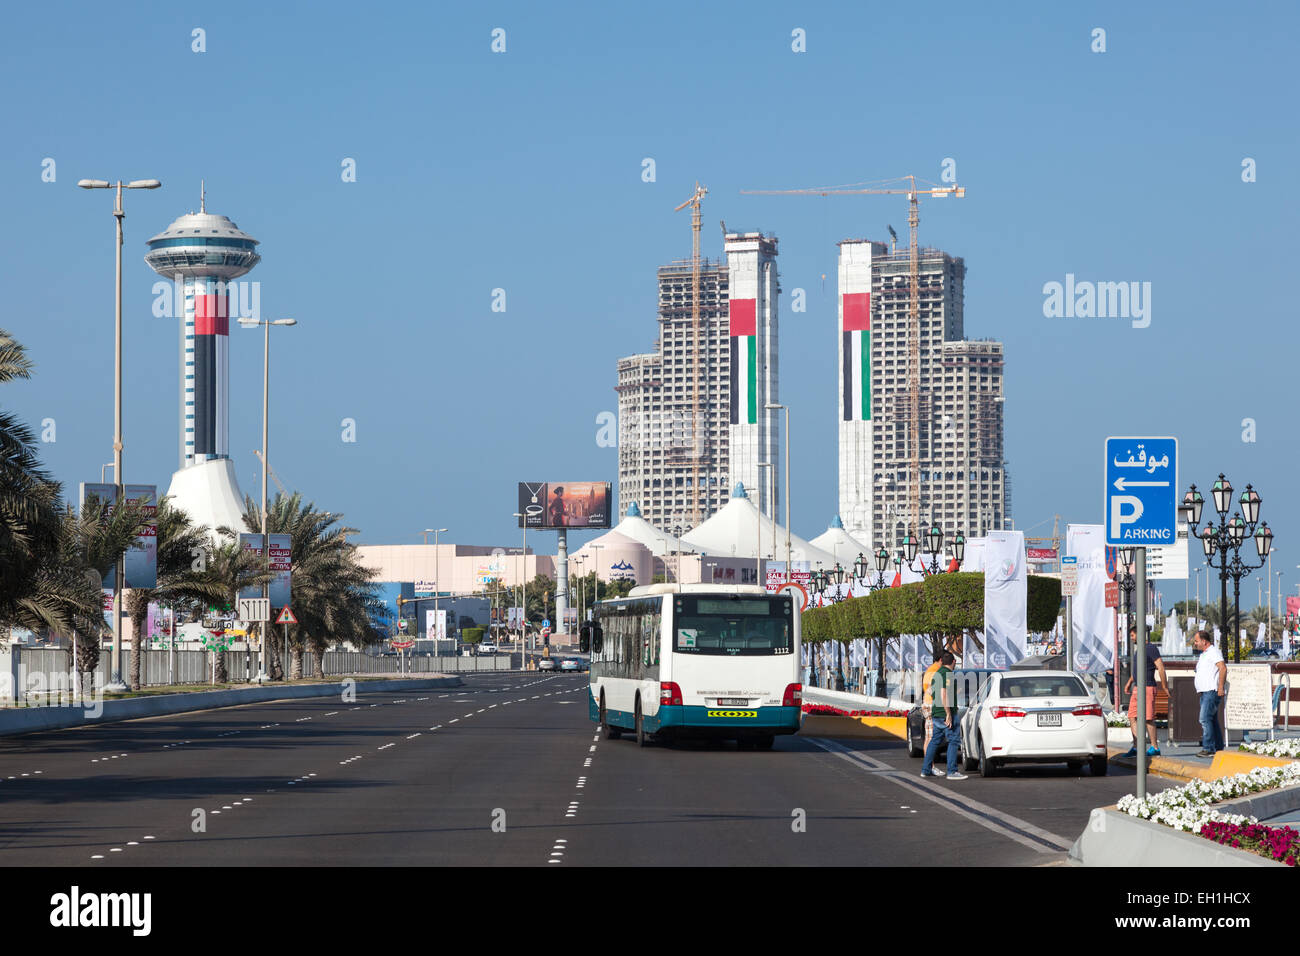 The Fairmont Marina Residences construction in Abu Dhabi. December 19, 2014 in Abu Dhabi, United Arab Emirates Stock Photo